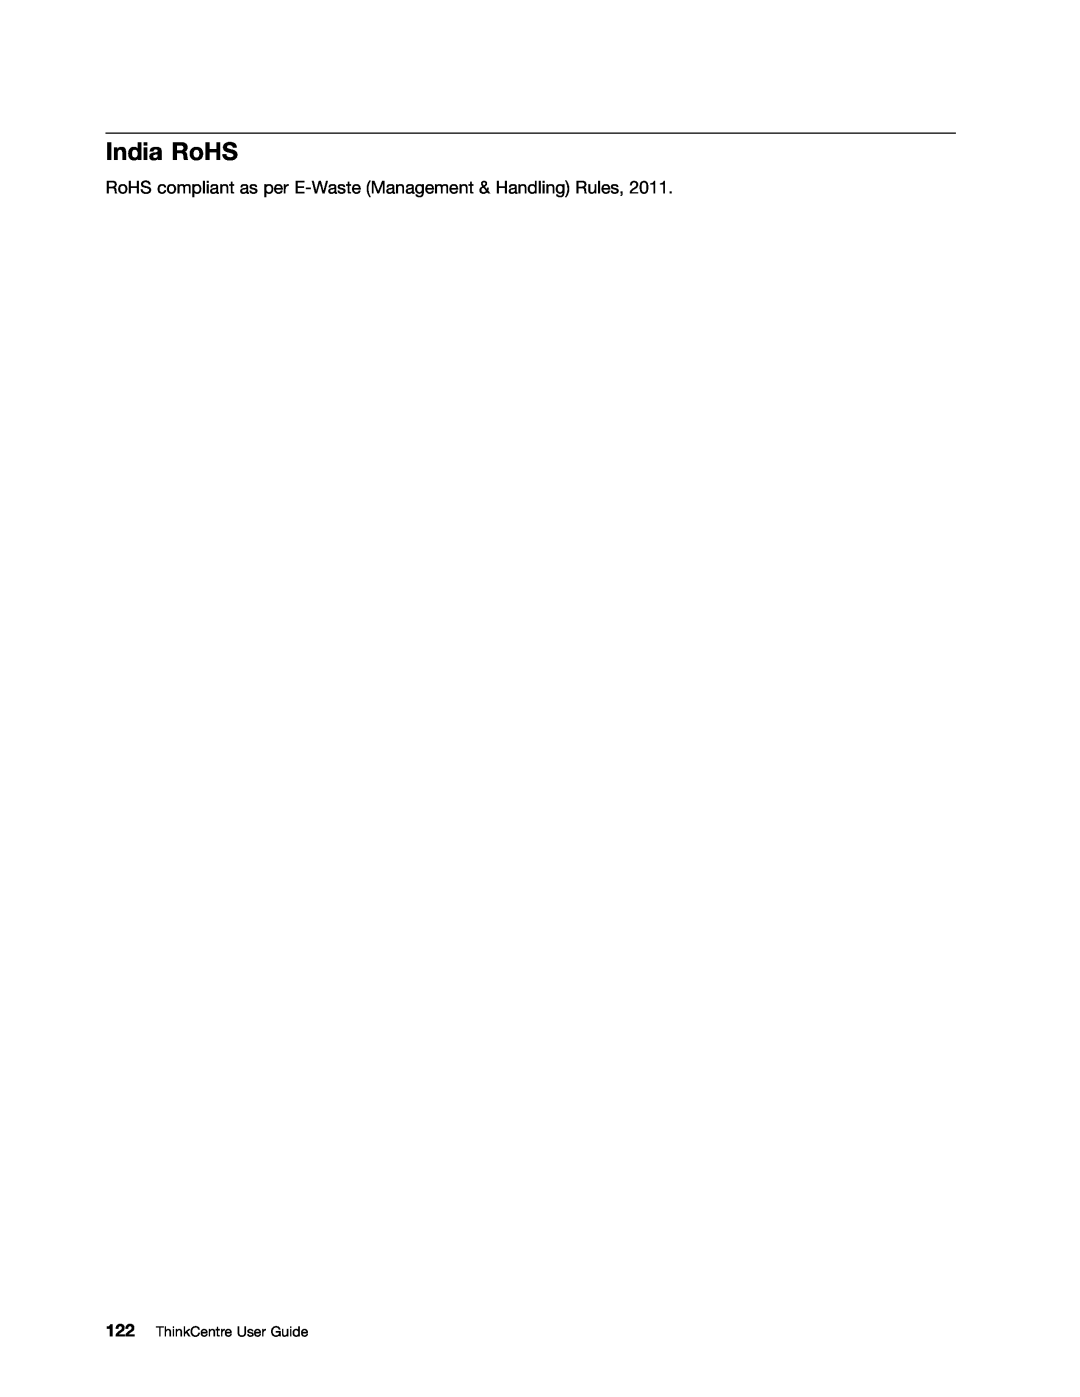 Lenovo 3484JMU manual India RoHS, RoHS compliant as per E-Waste Management & Handling Rules 